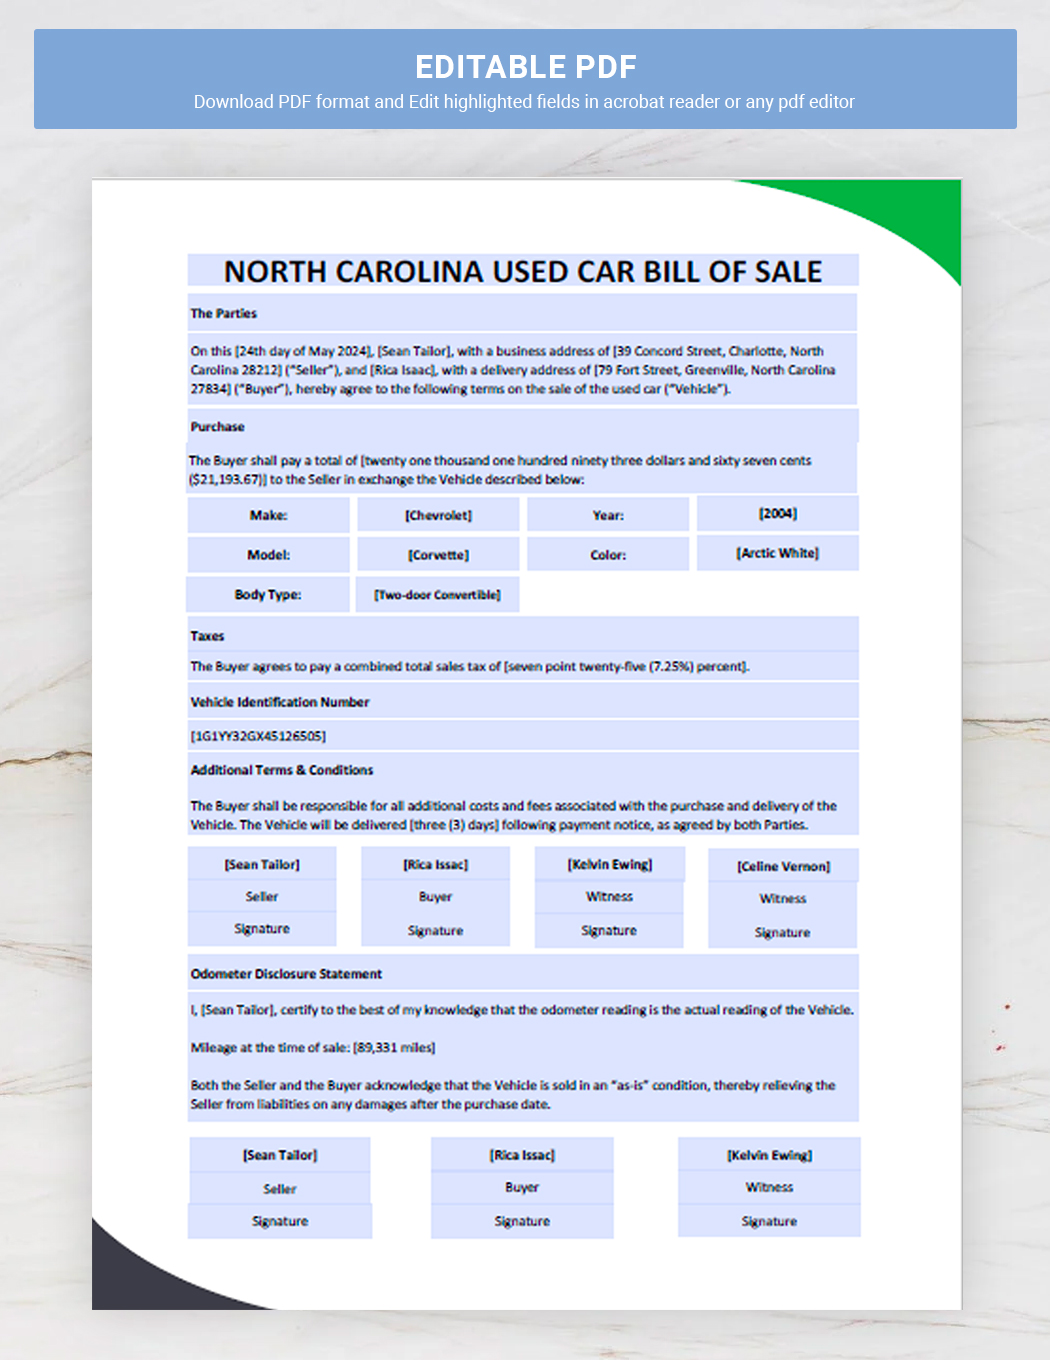 North Carolina Used Car Bill of Sale Form Template